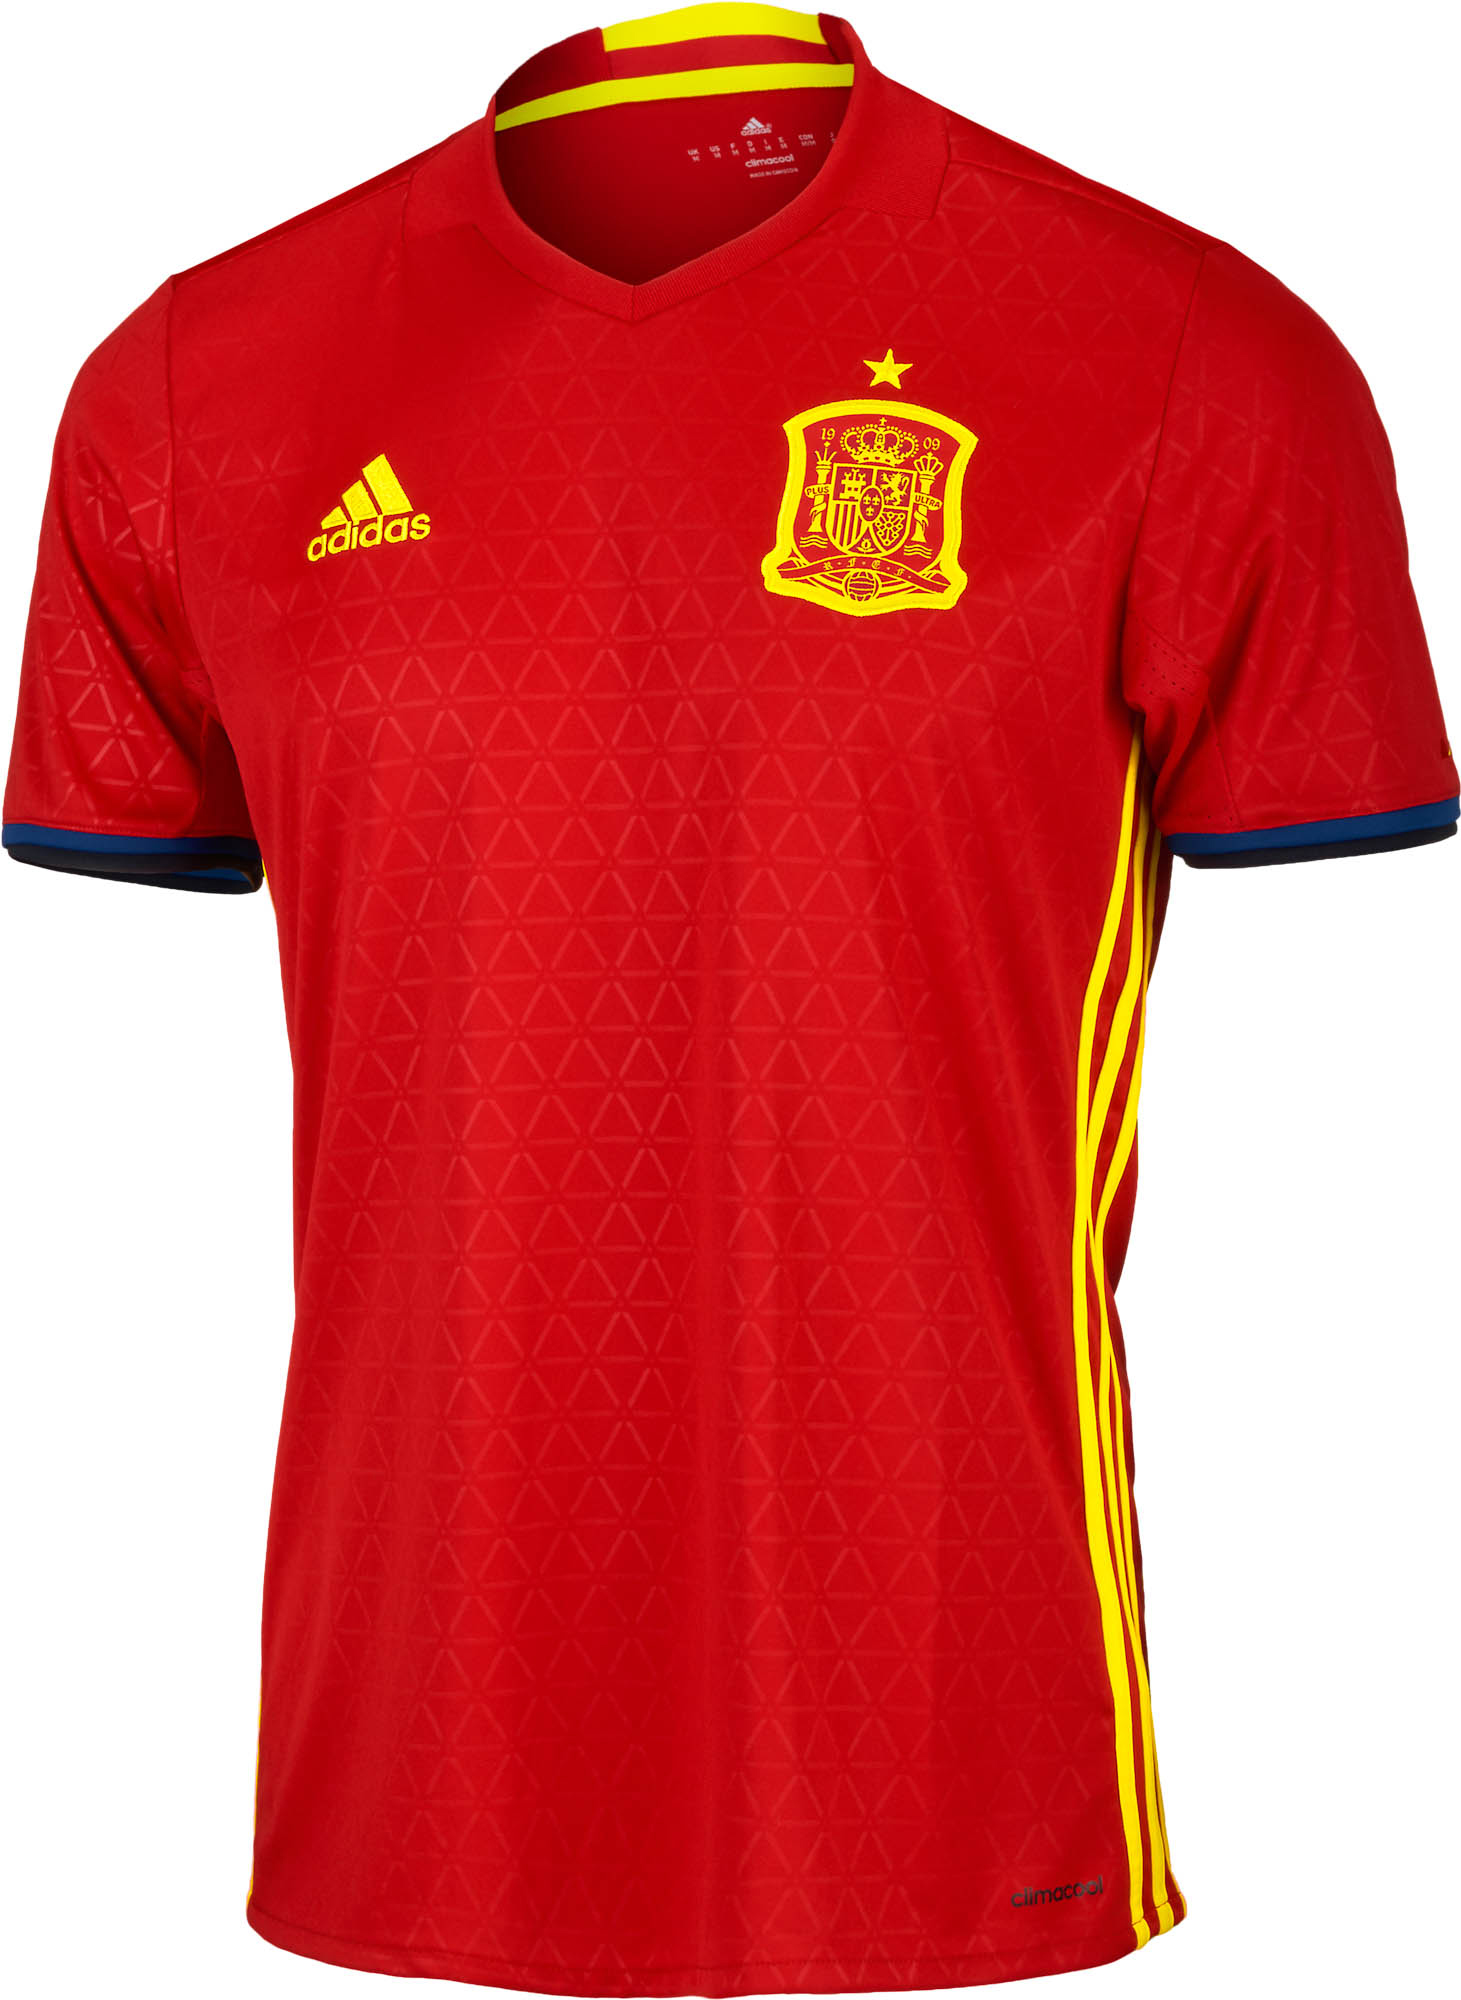 adidas Spain Home Jersey 2016 Spain Soccer Jerseys